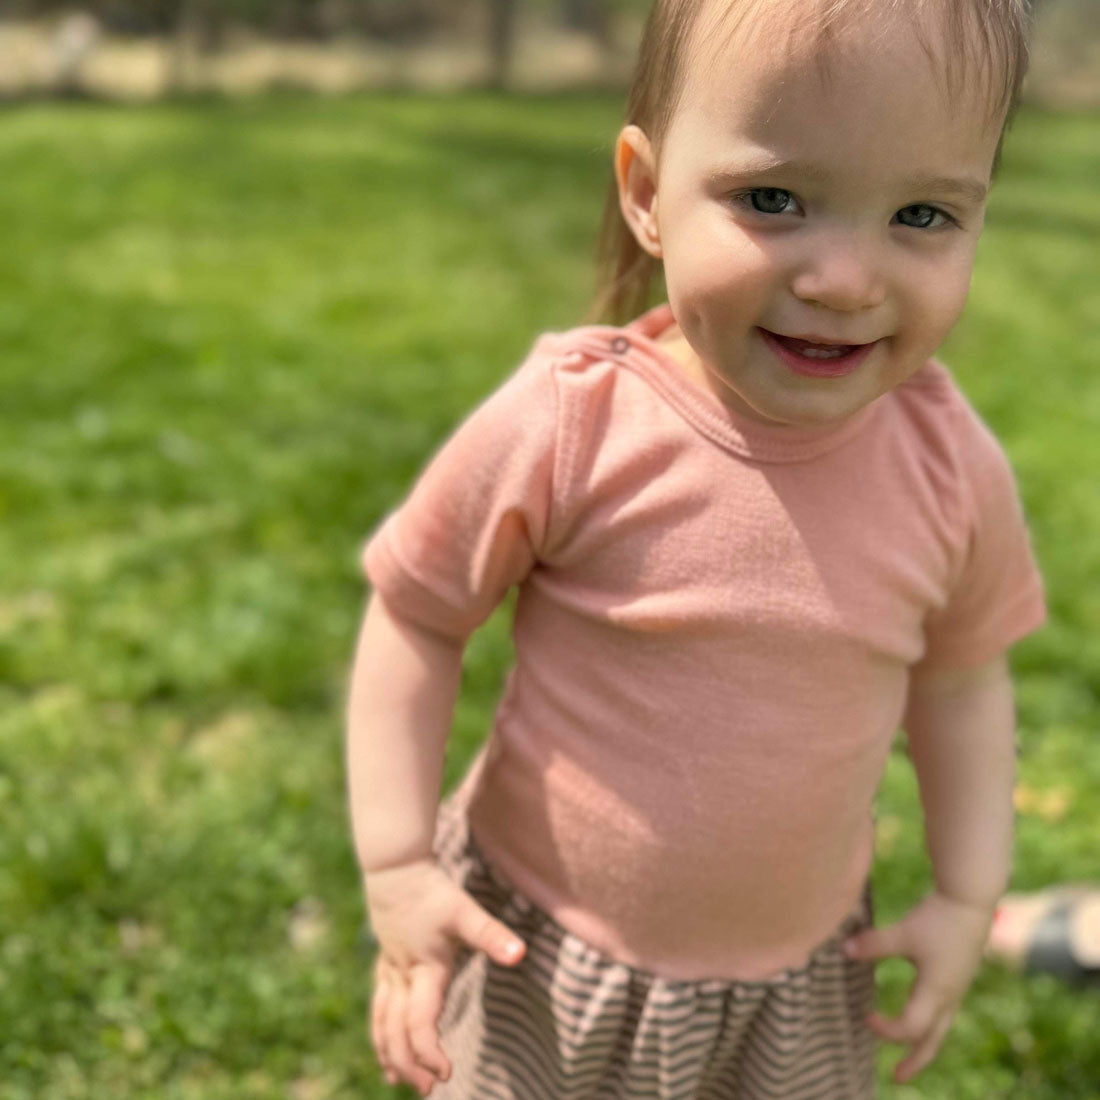 ENGEL Baby/Toddler Short-Sleeved Dress with Snap-Bottom in Organic Wool/Silk